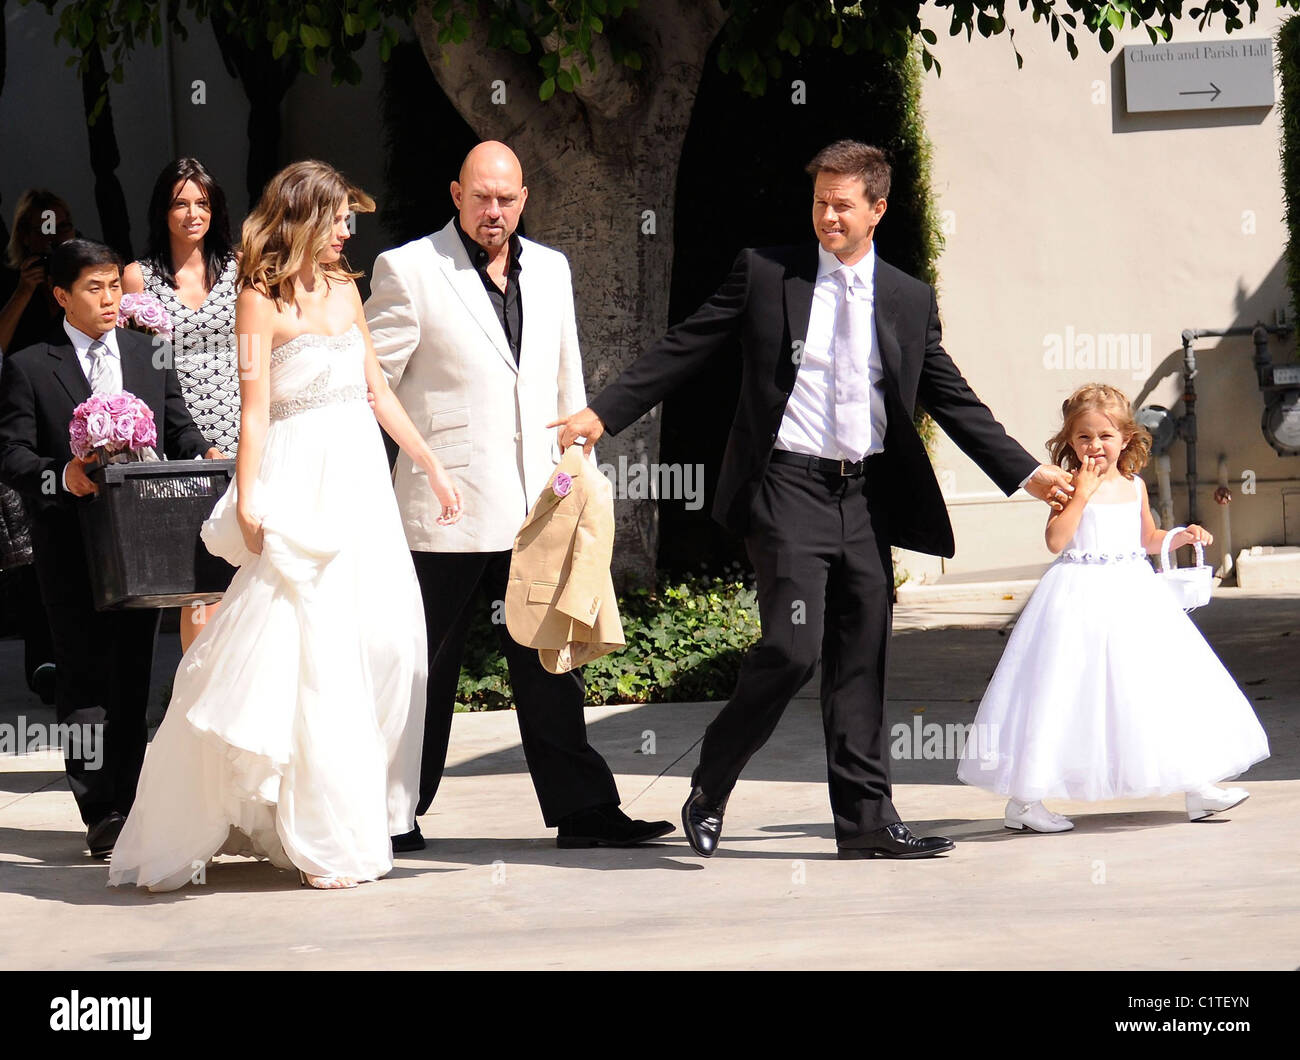 Actor Mark Wahlberg Marries His Longtime Girlfriend Model Rhea Durham At Good Shepherd Catholic